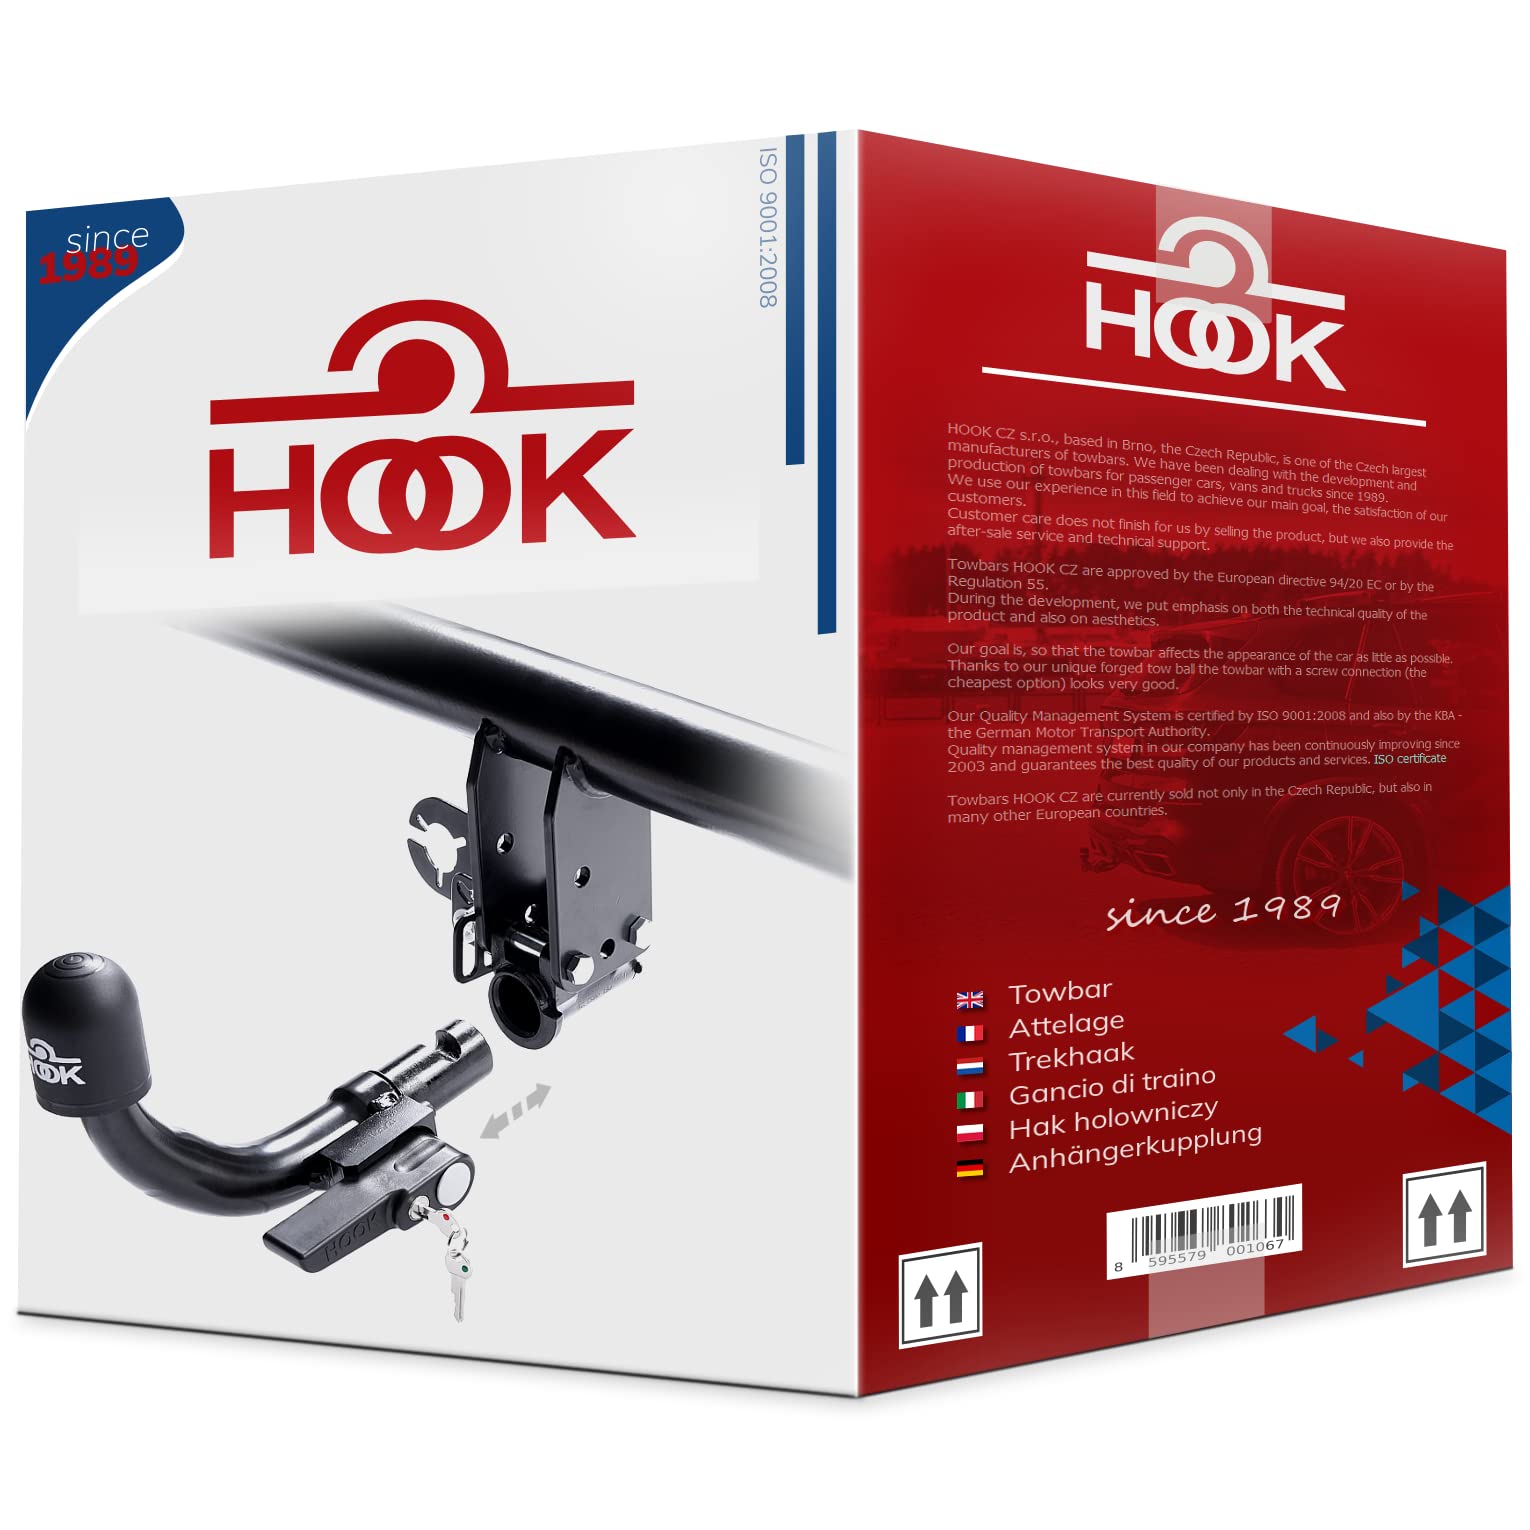 Hook horizontal abnehmbare AHK Anhängerkupplung für Nissan Qashqai I J10 2007-2014 + universell Elektrosatz 13-polig von Hook